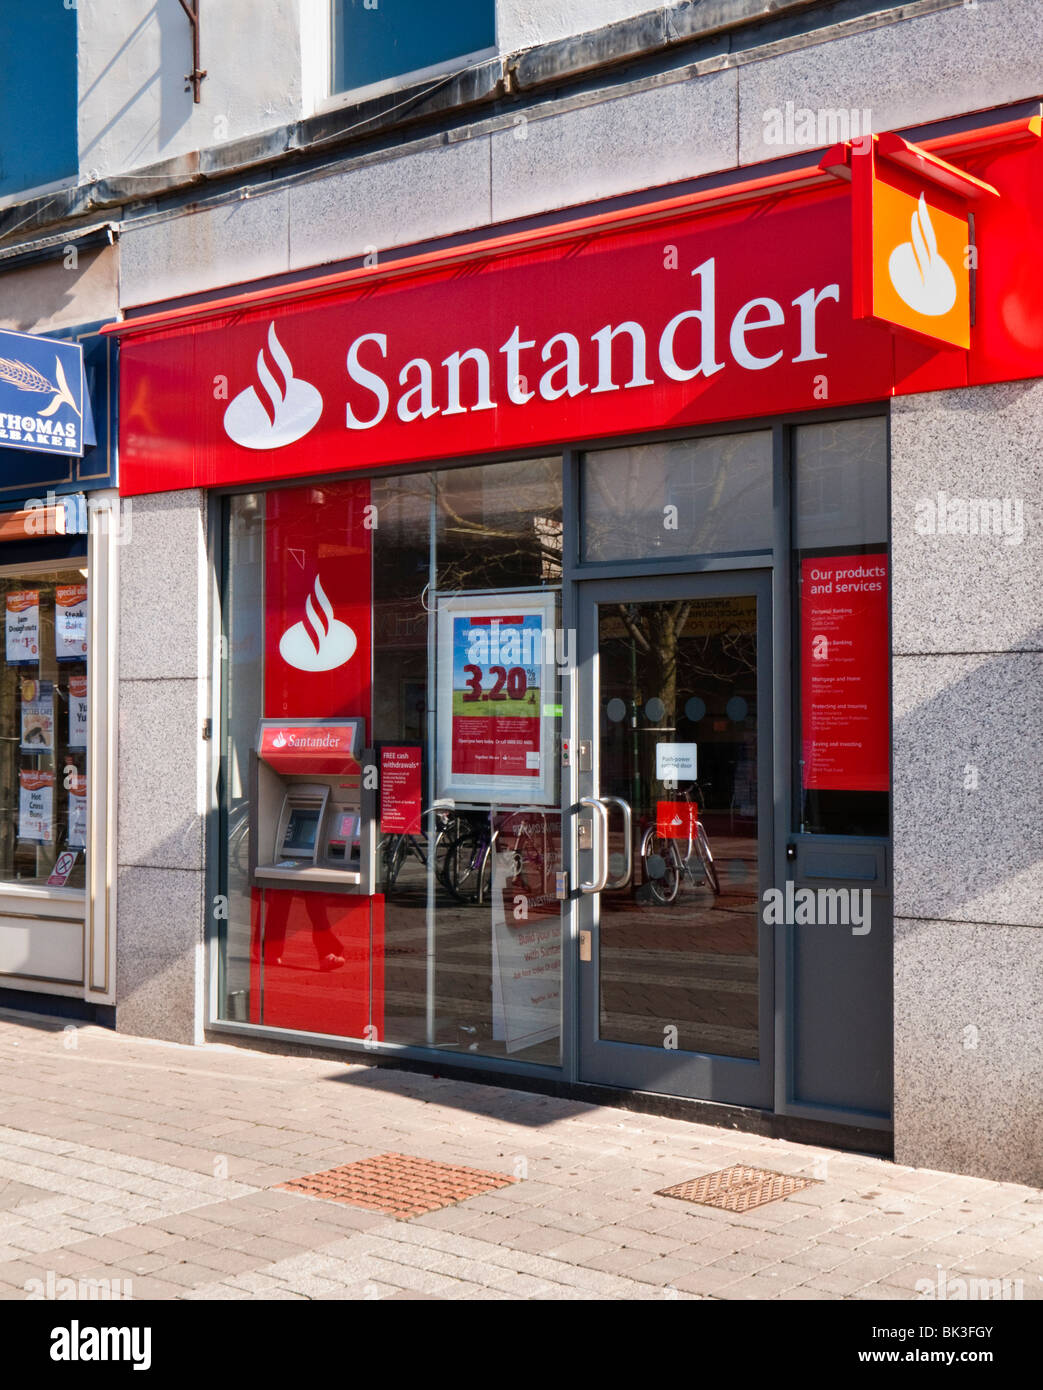 Santander bank branch with signs and logo England, UK Stock Photo